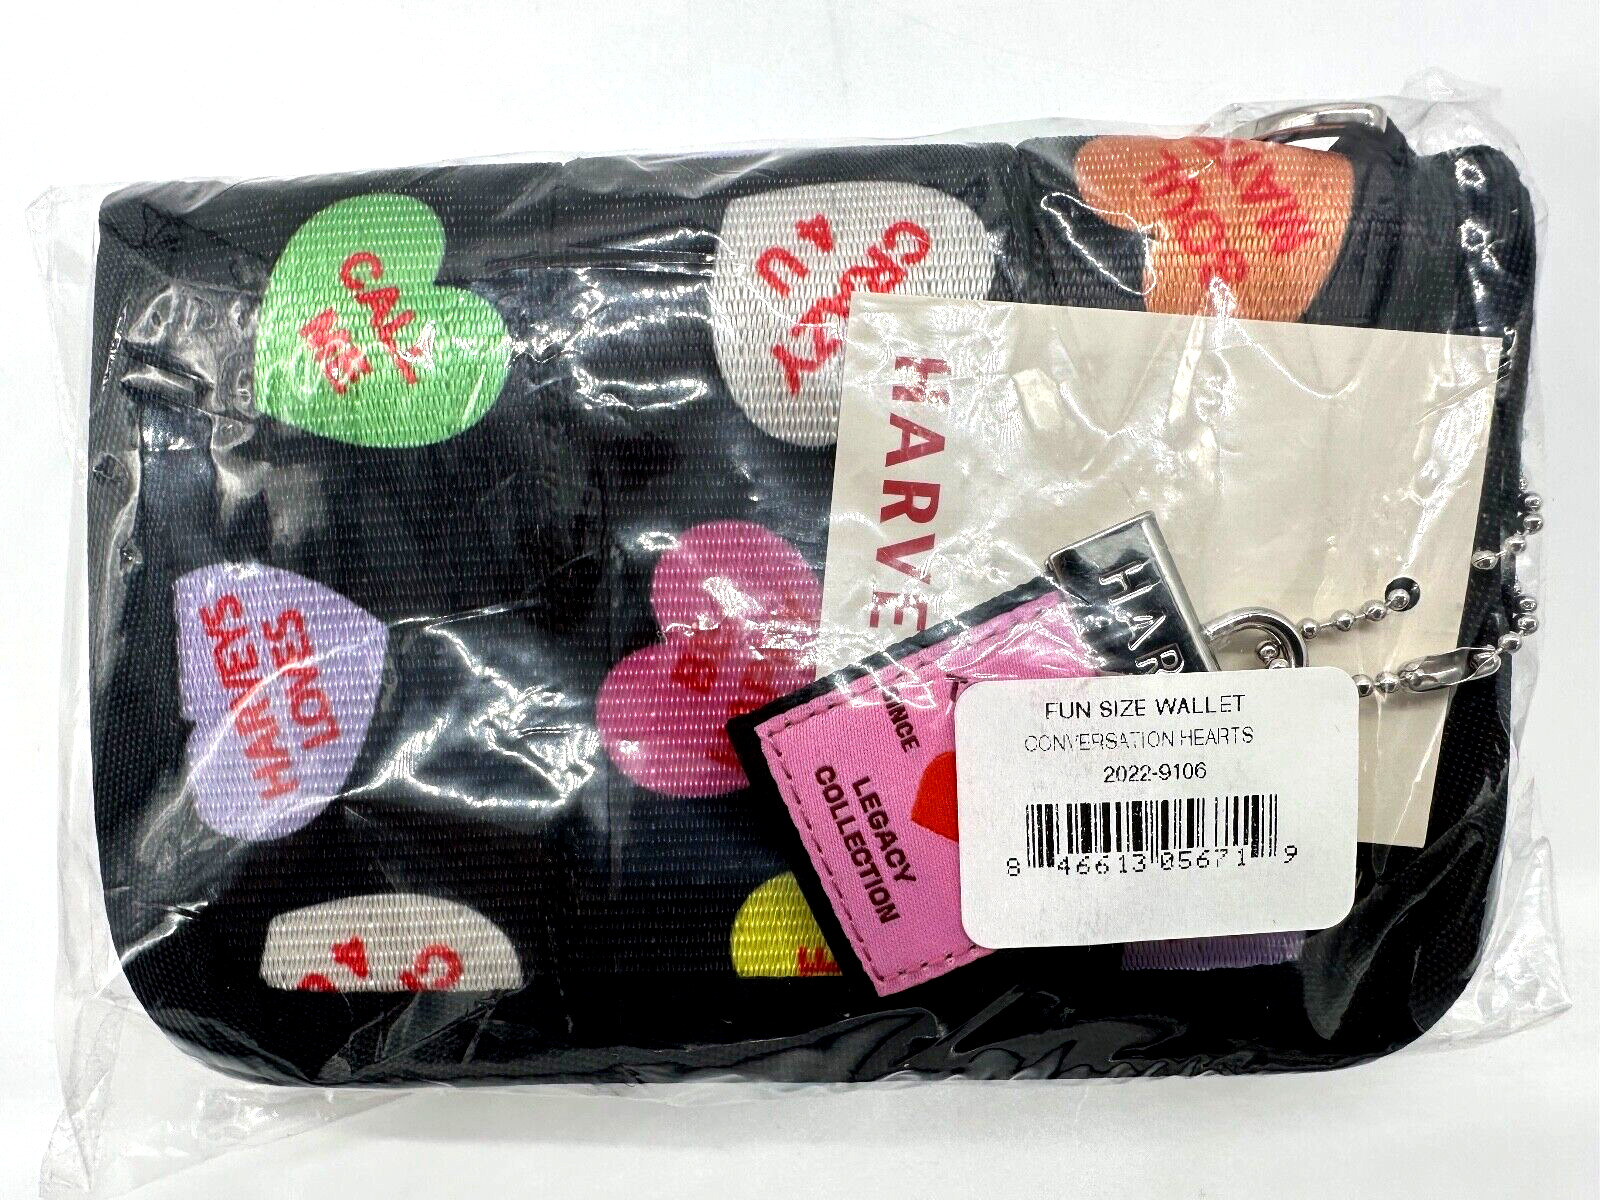 Harveys Seatbelt Fun Size Wallet Conversation Hearts Candy Valentines Day NIP